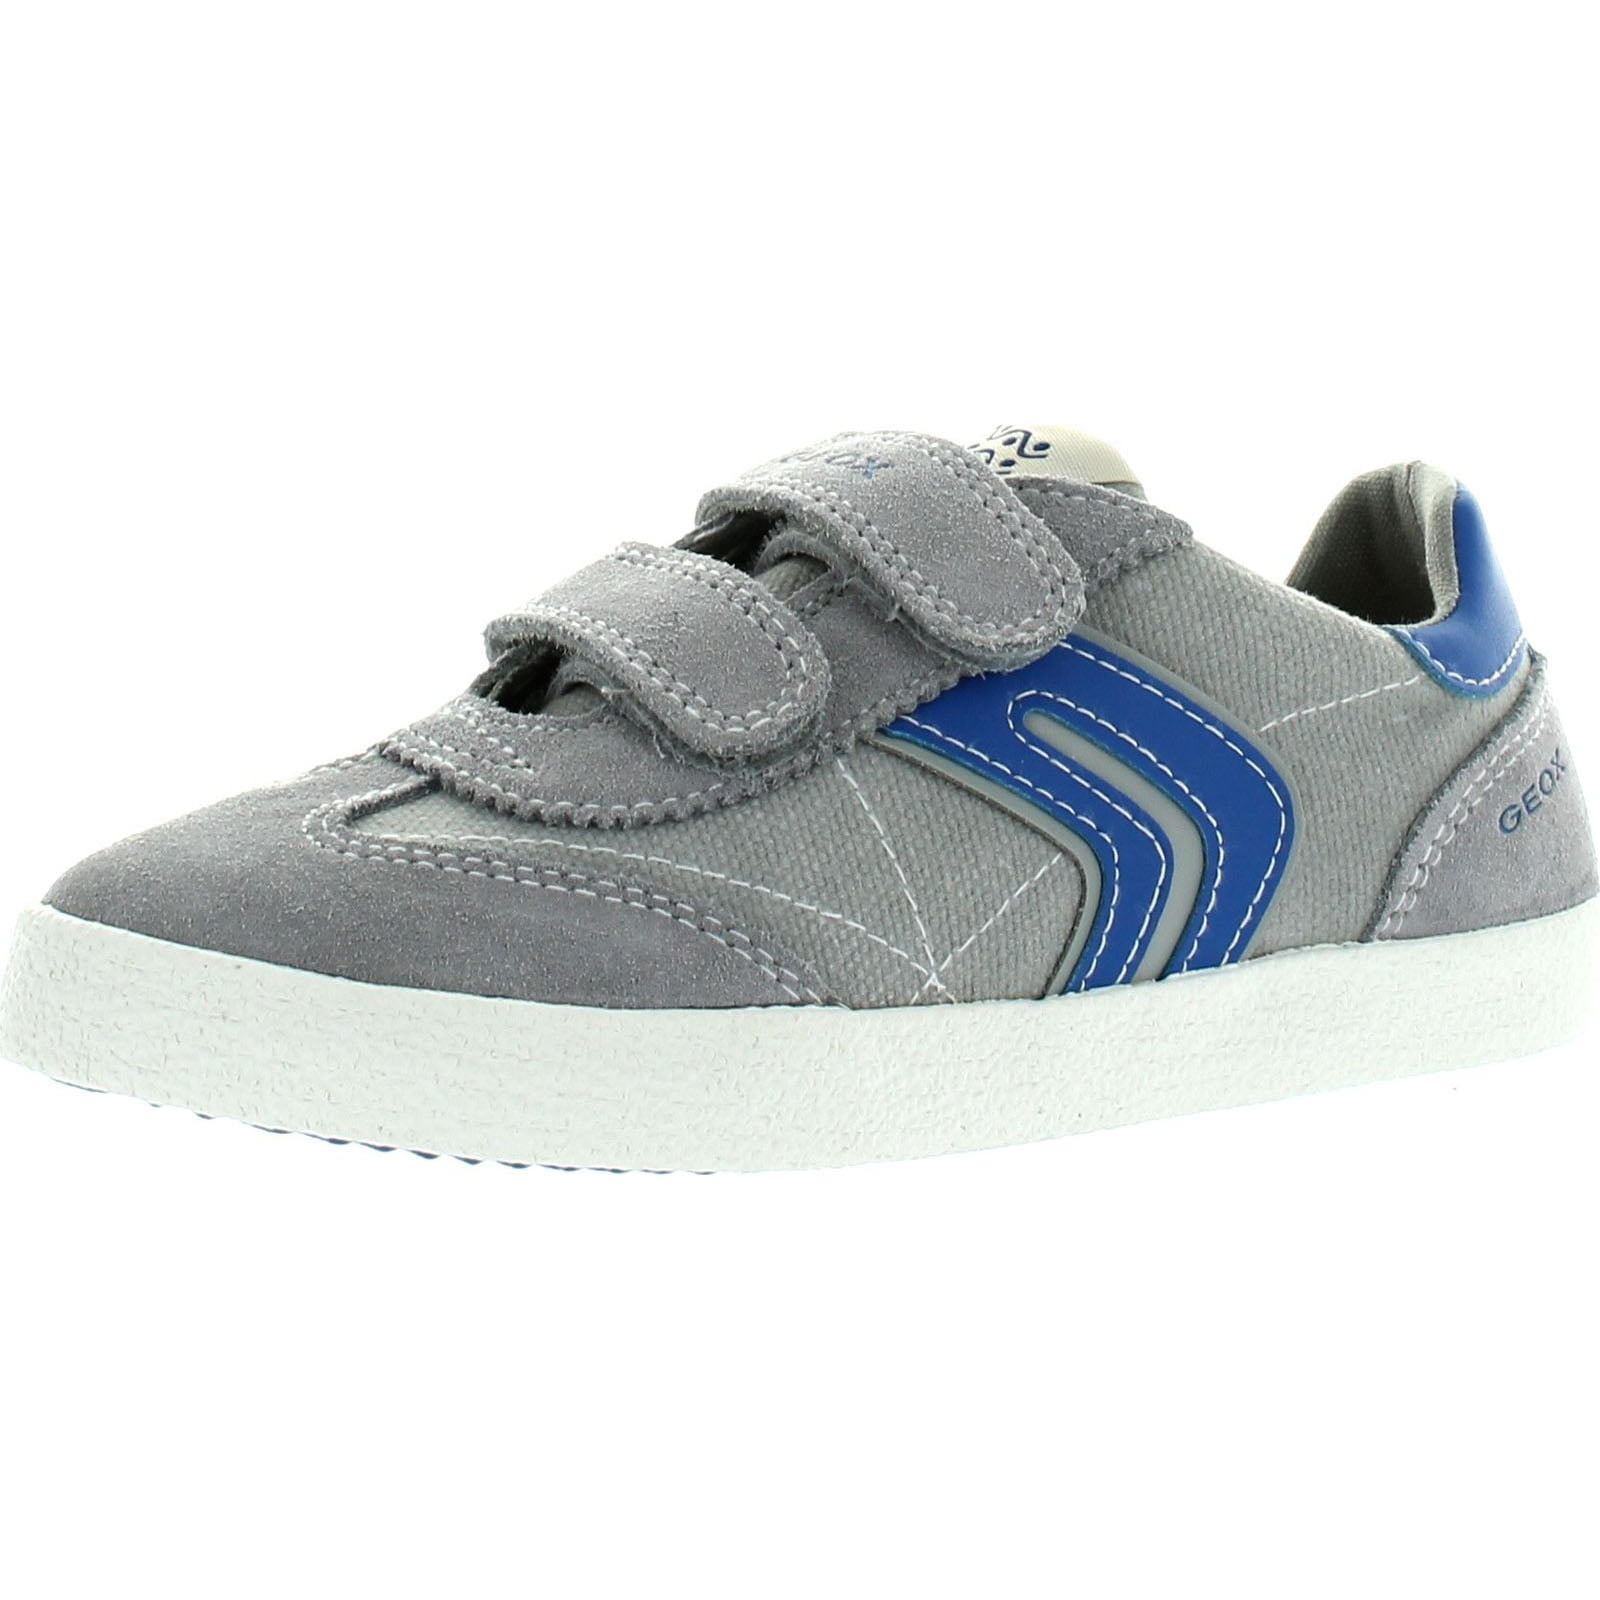 Geox Boys Kiwi Kids Casual Everyday Fashion Sneakers, Grey/Royal, 26 -